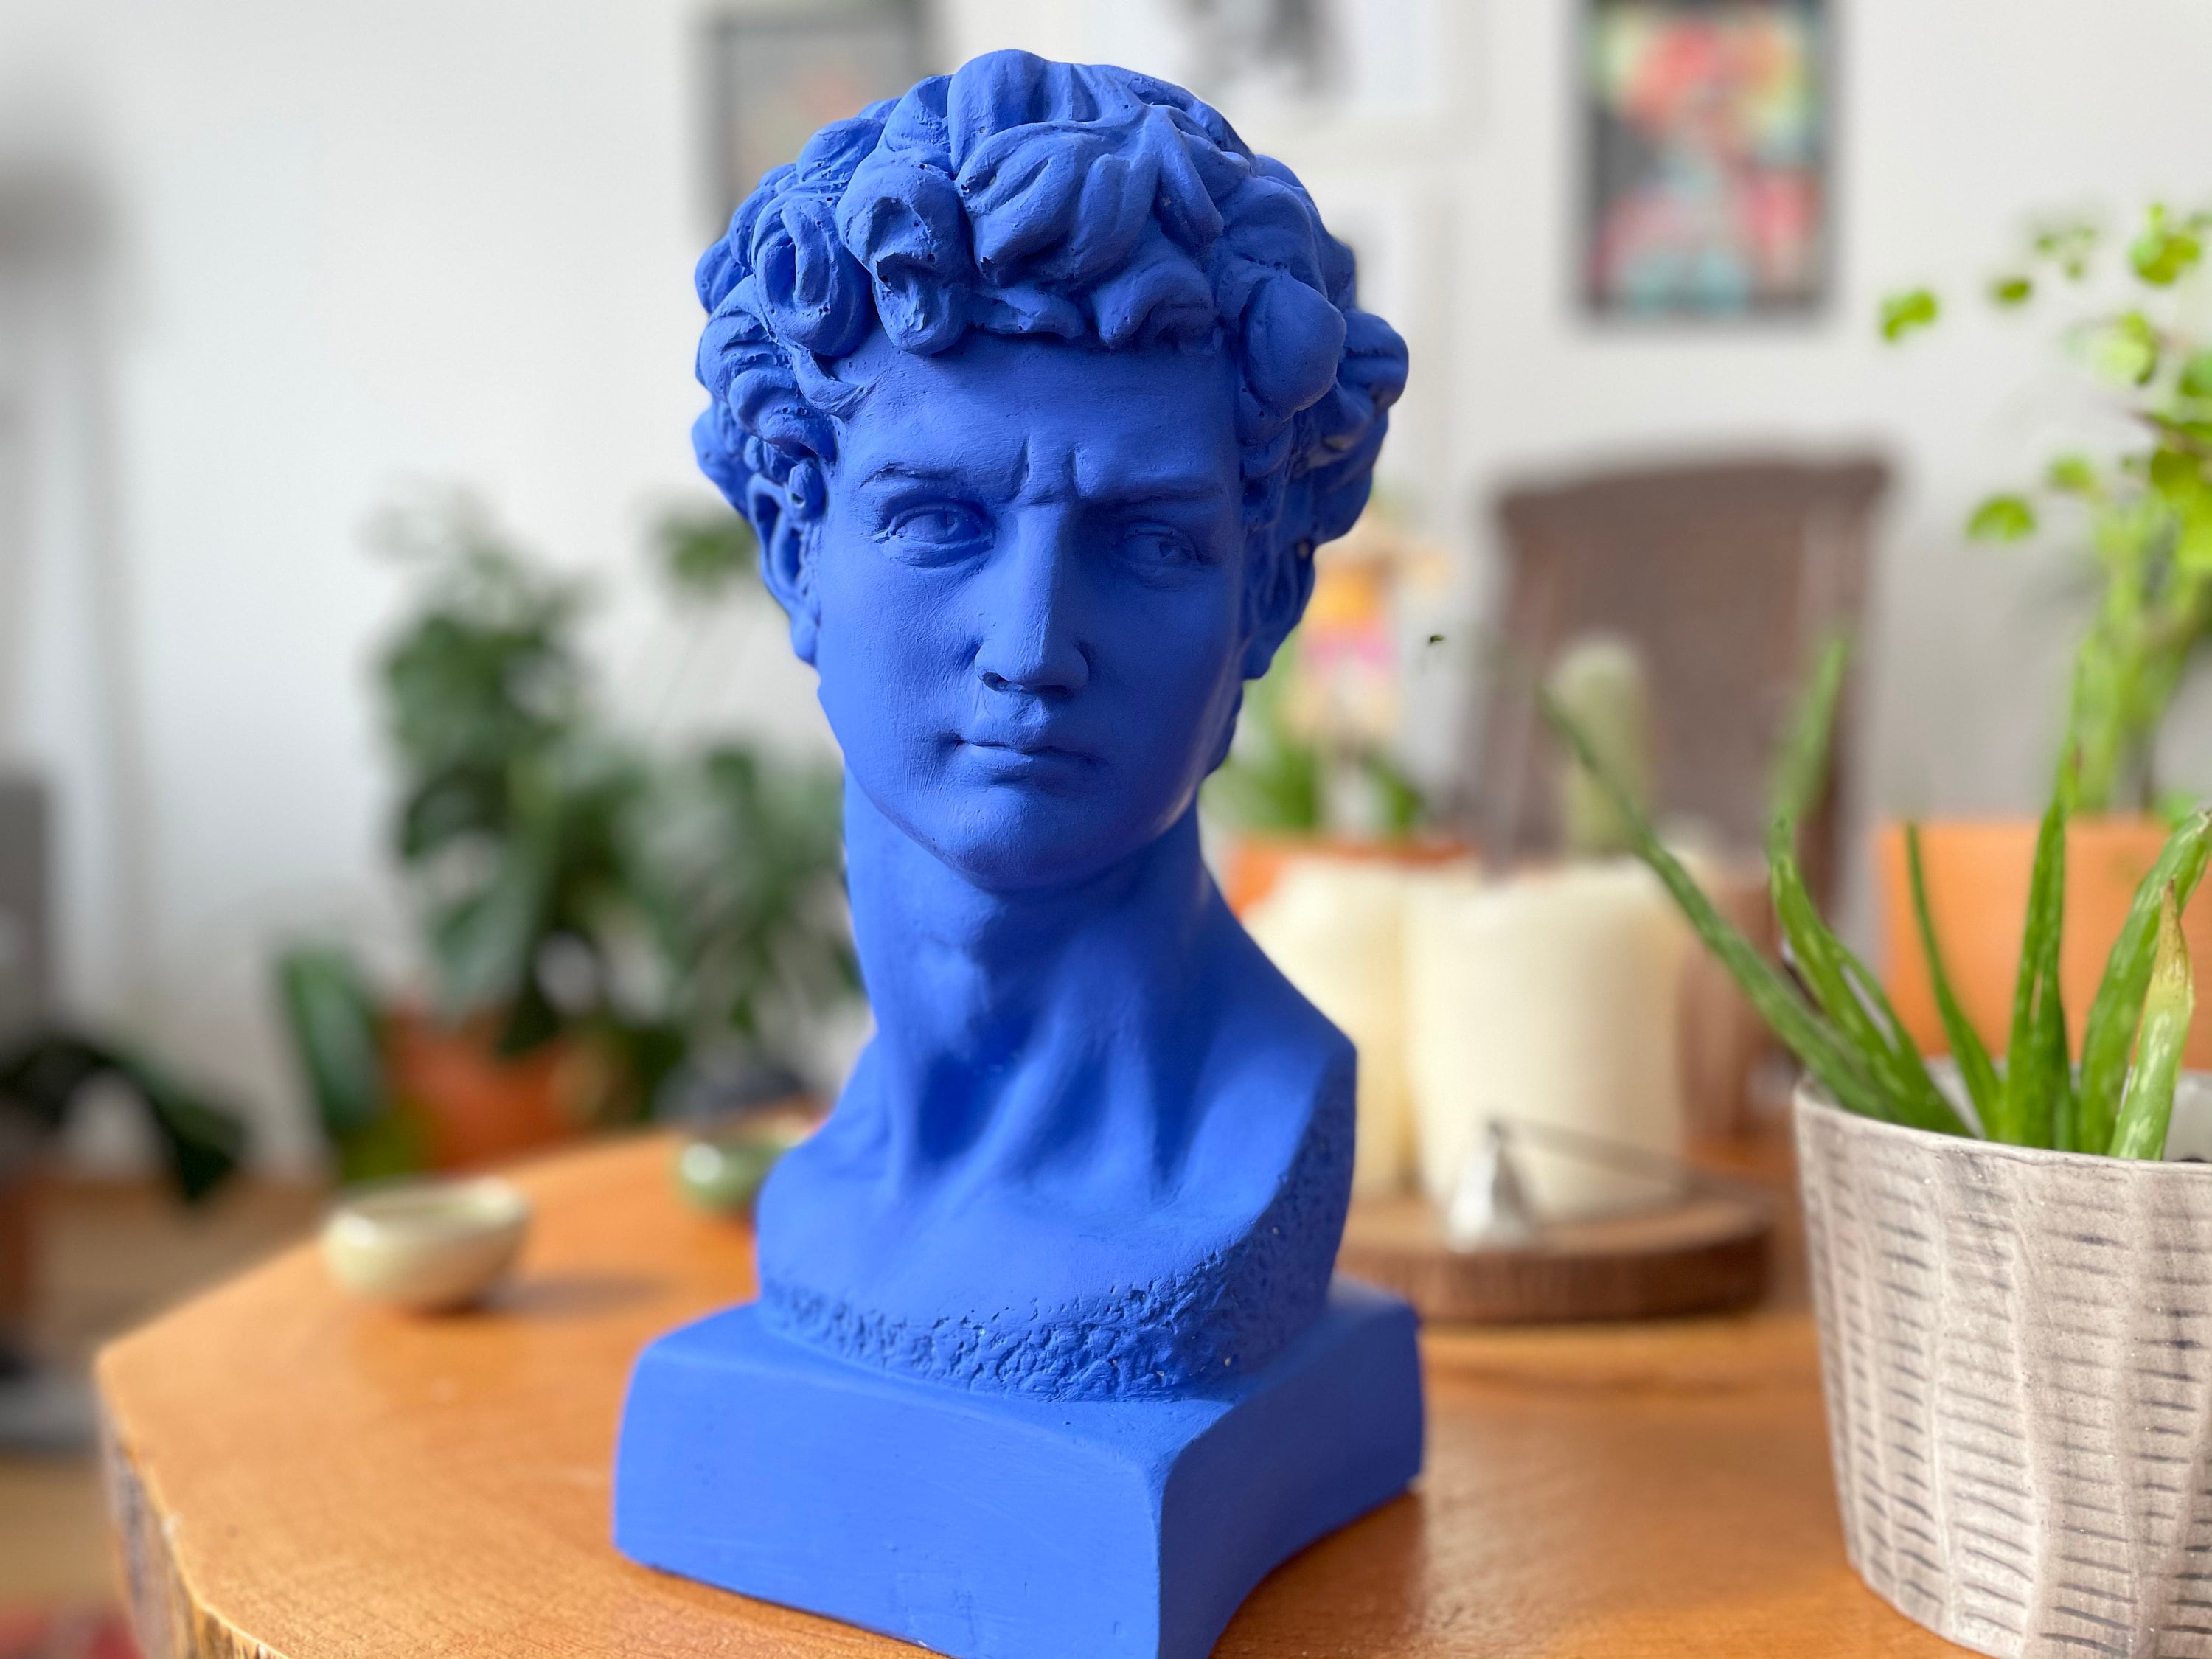 Ethereal Elegance: Large Night Blue David Bust Sculpture